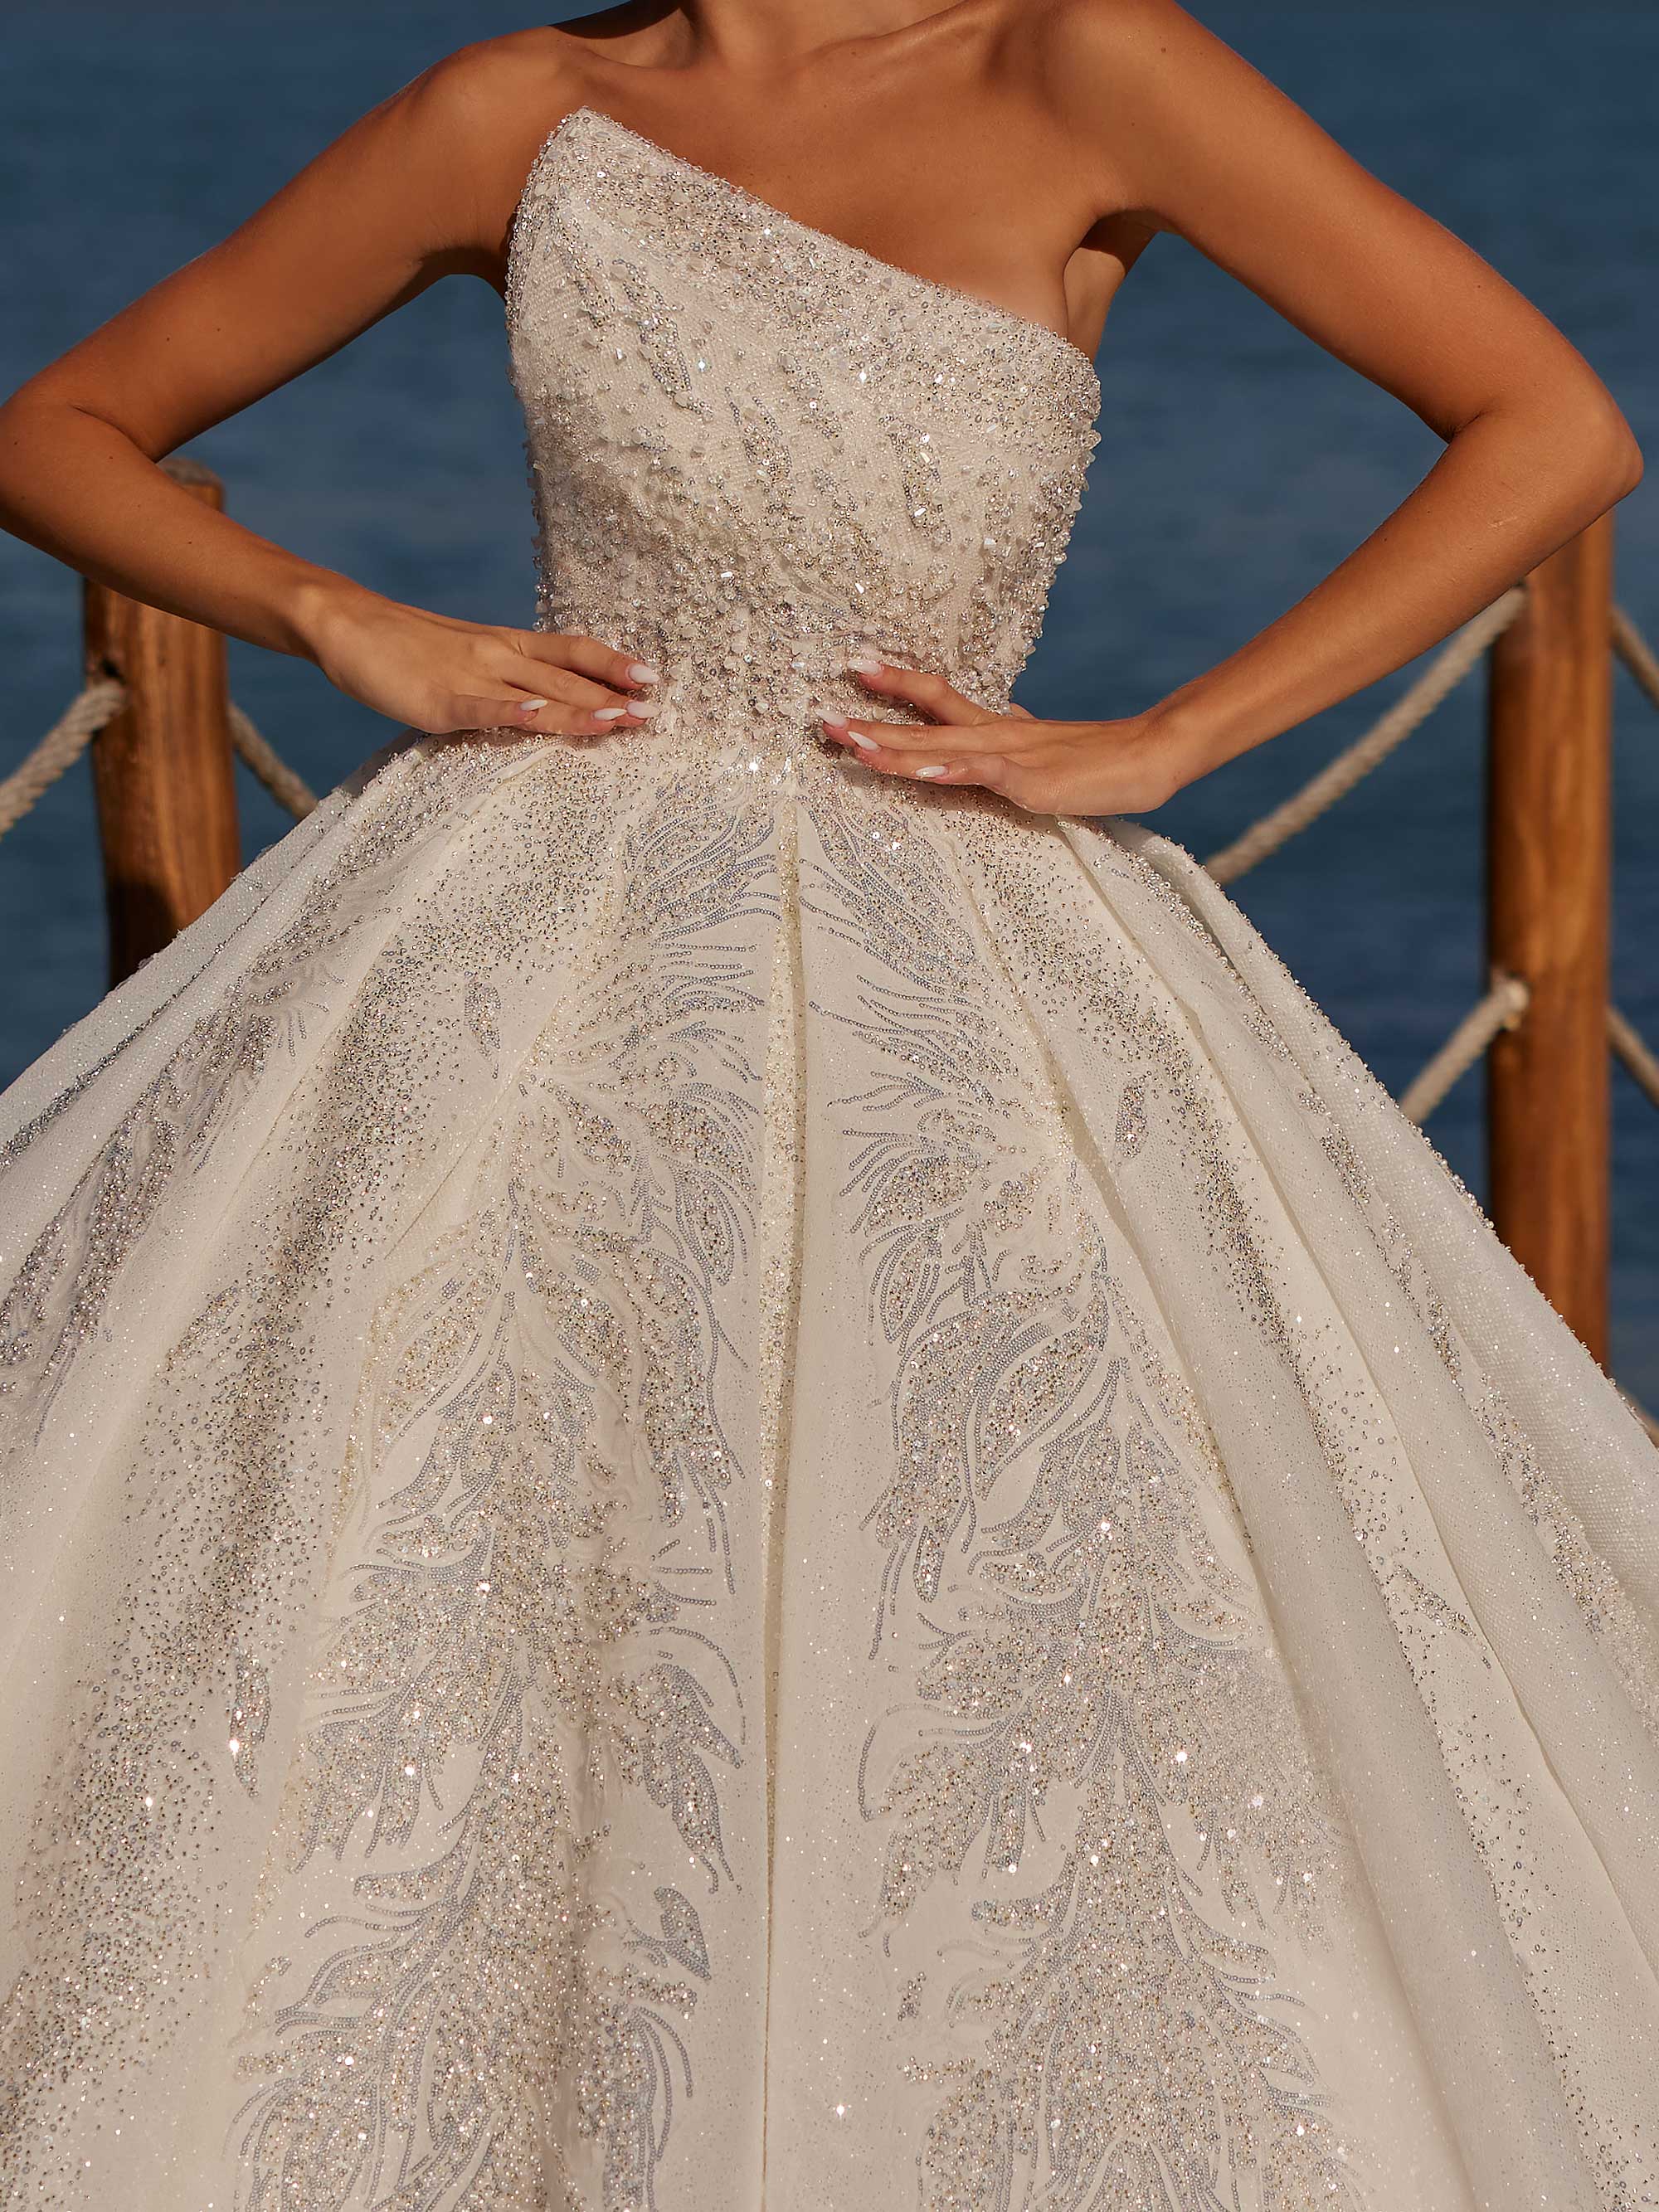 buy gergous asymmetrical strapless ball gown wedding dress with sequin embellishments online website store